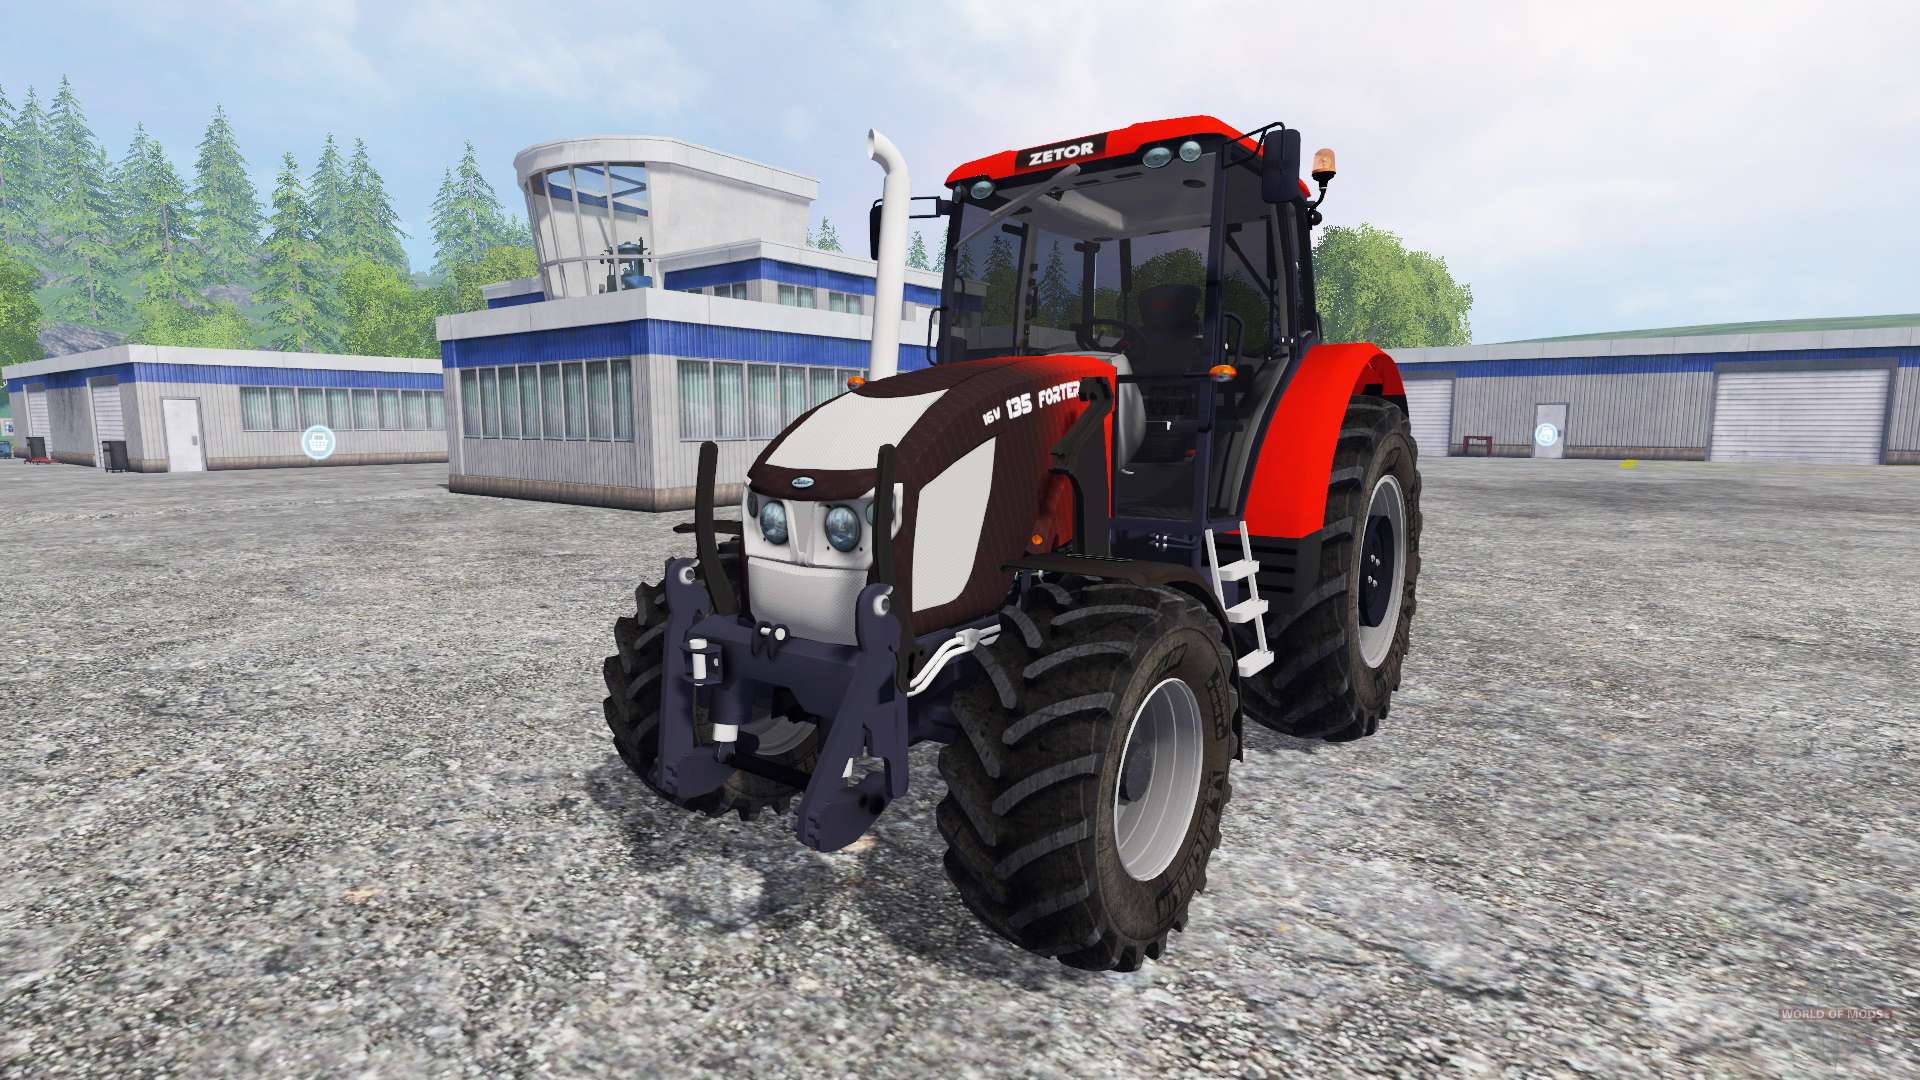 Tekstschrijver Zuidelijk Leeg de prullenbak Zetor Forterra 135 HSX for Farming Simulator 2015